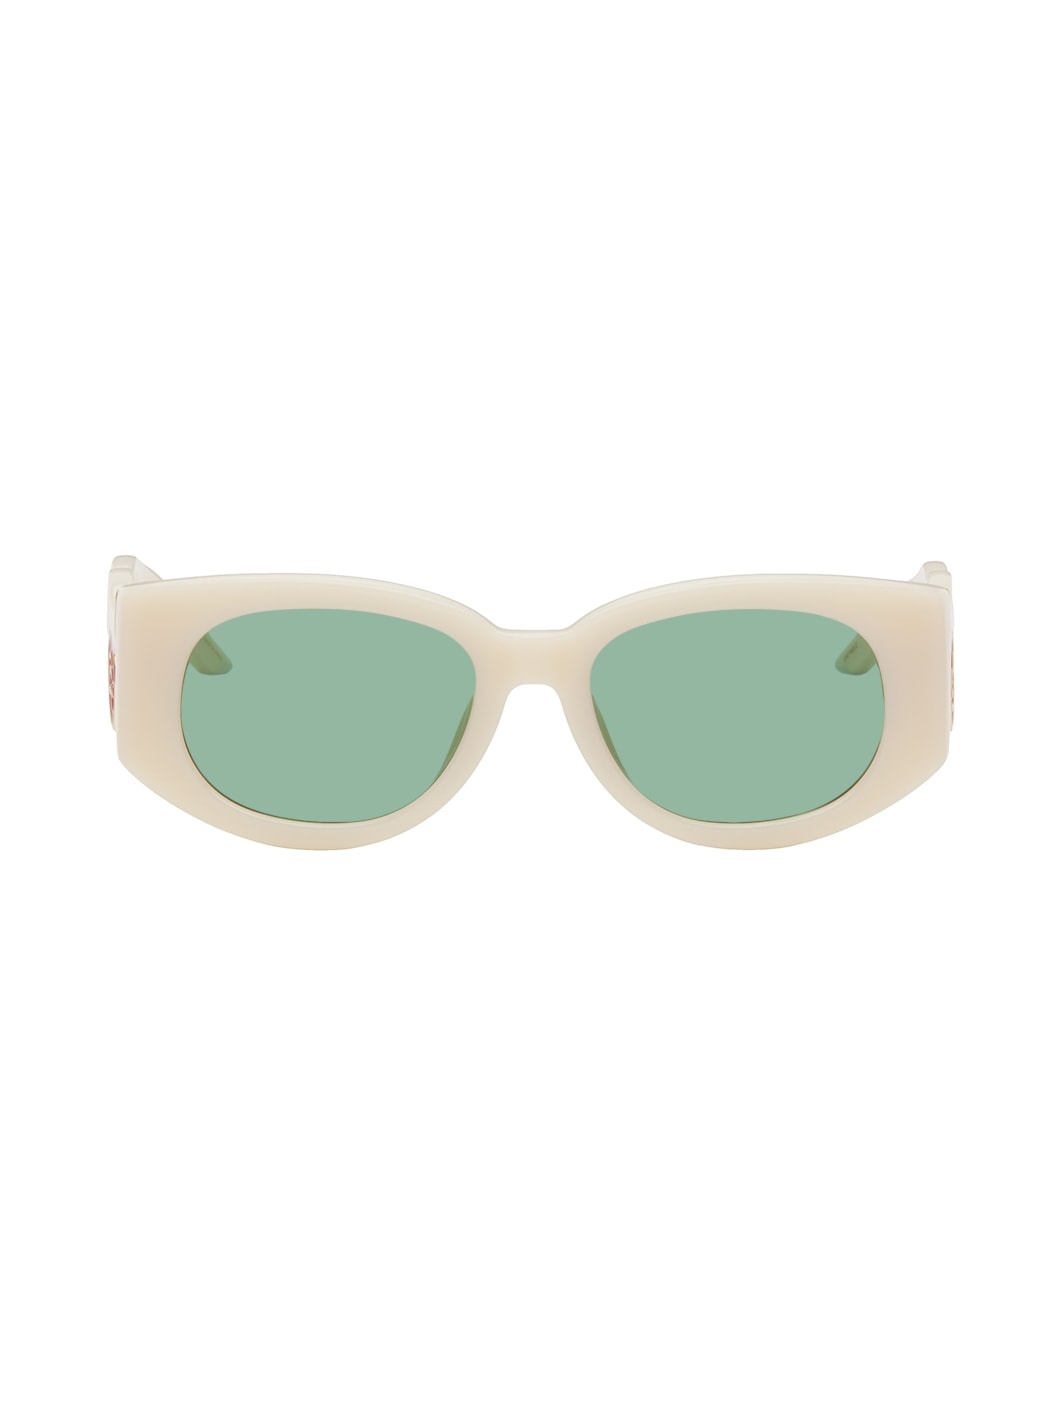 Off-White 'The Memphis' Sunglasses - 1